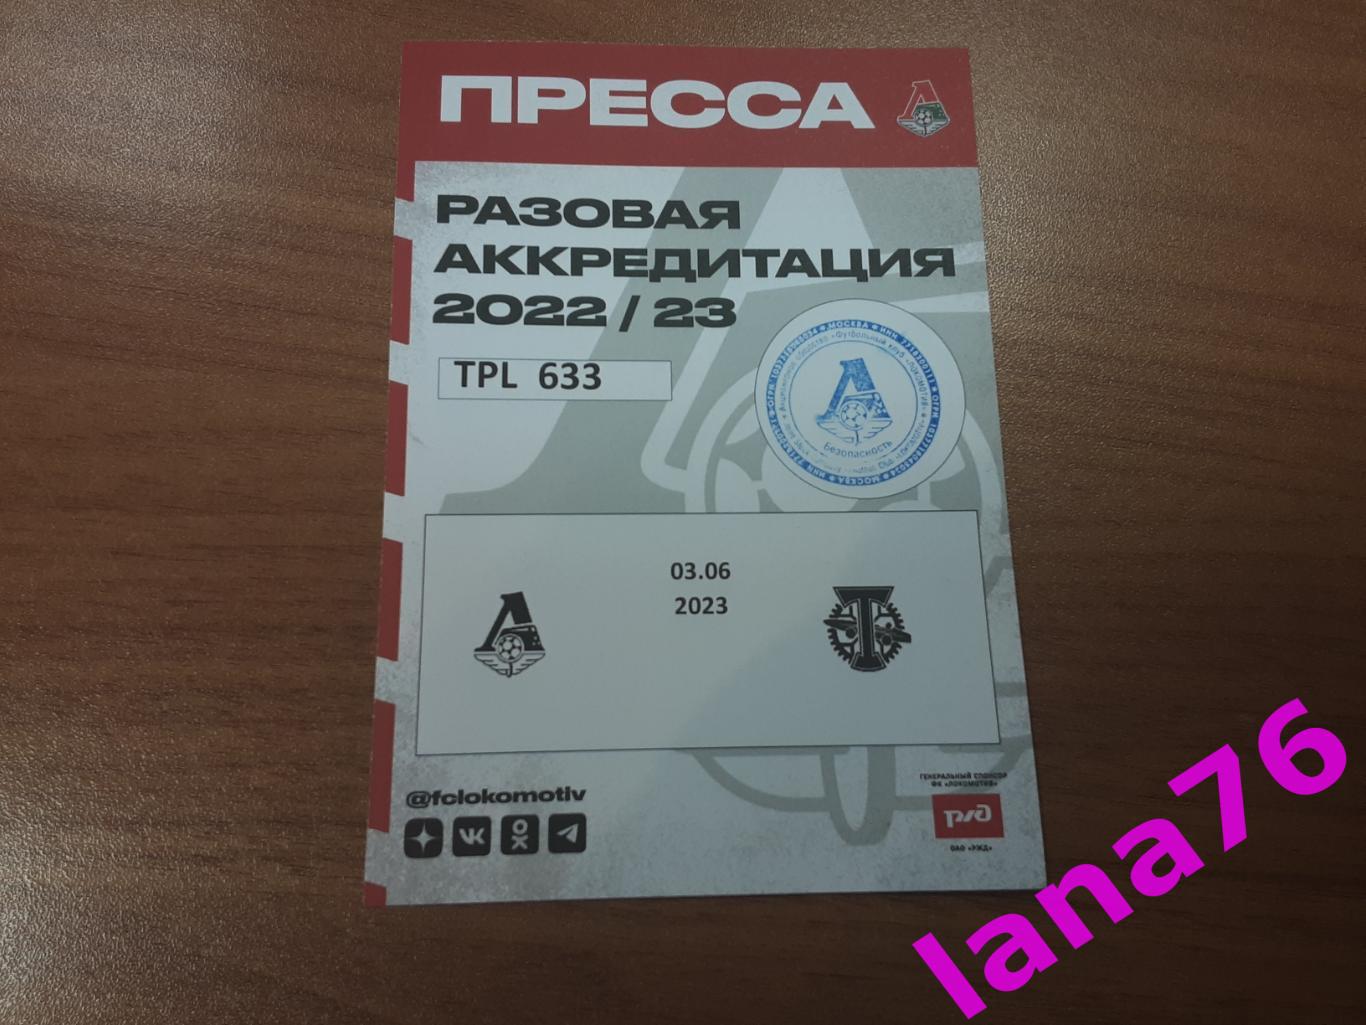 Локомотив Москва - Торпедо Москва 3.06.2023 аккредитация